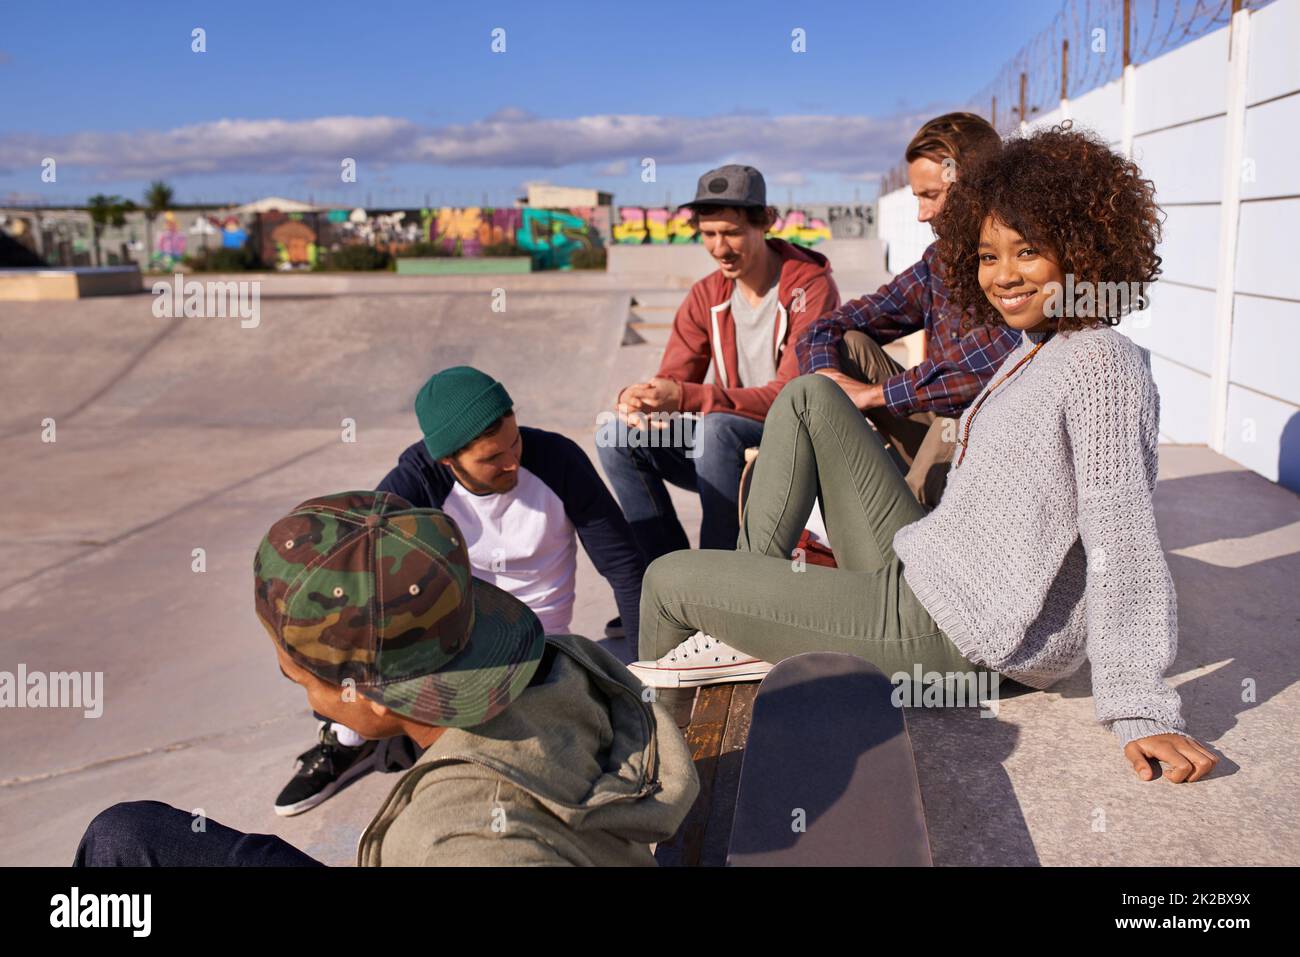 Socializing at the skatepark. Shot of a group of friends socializing at the skatepark. Stock Photo